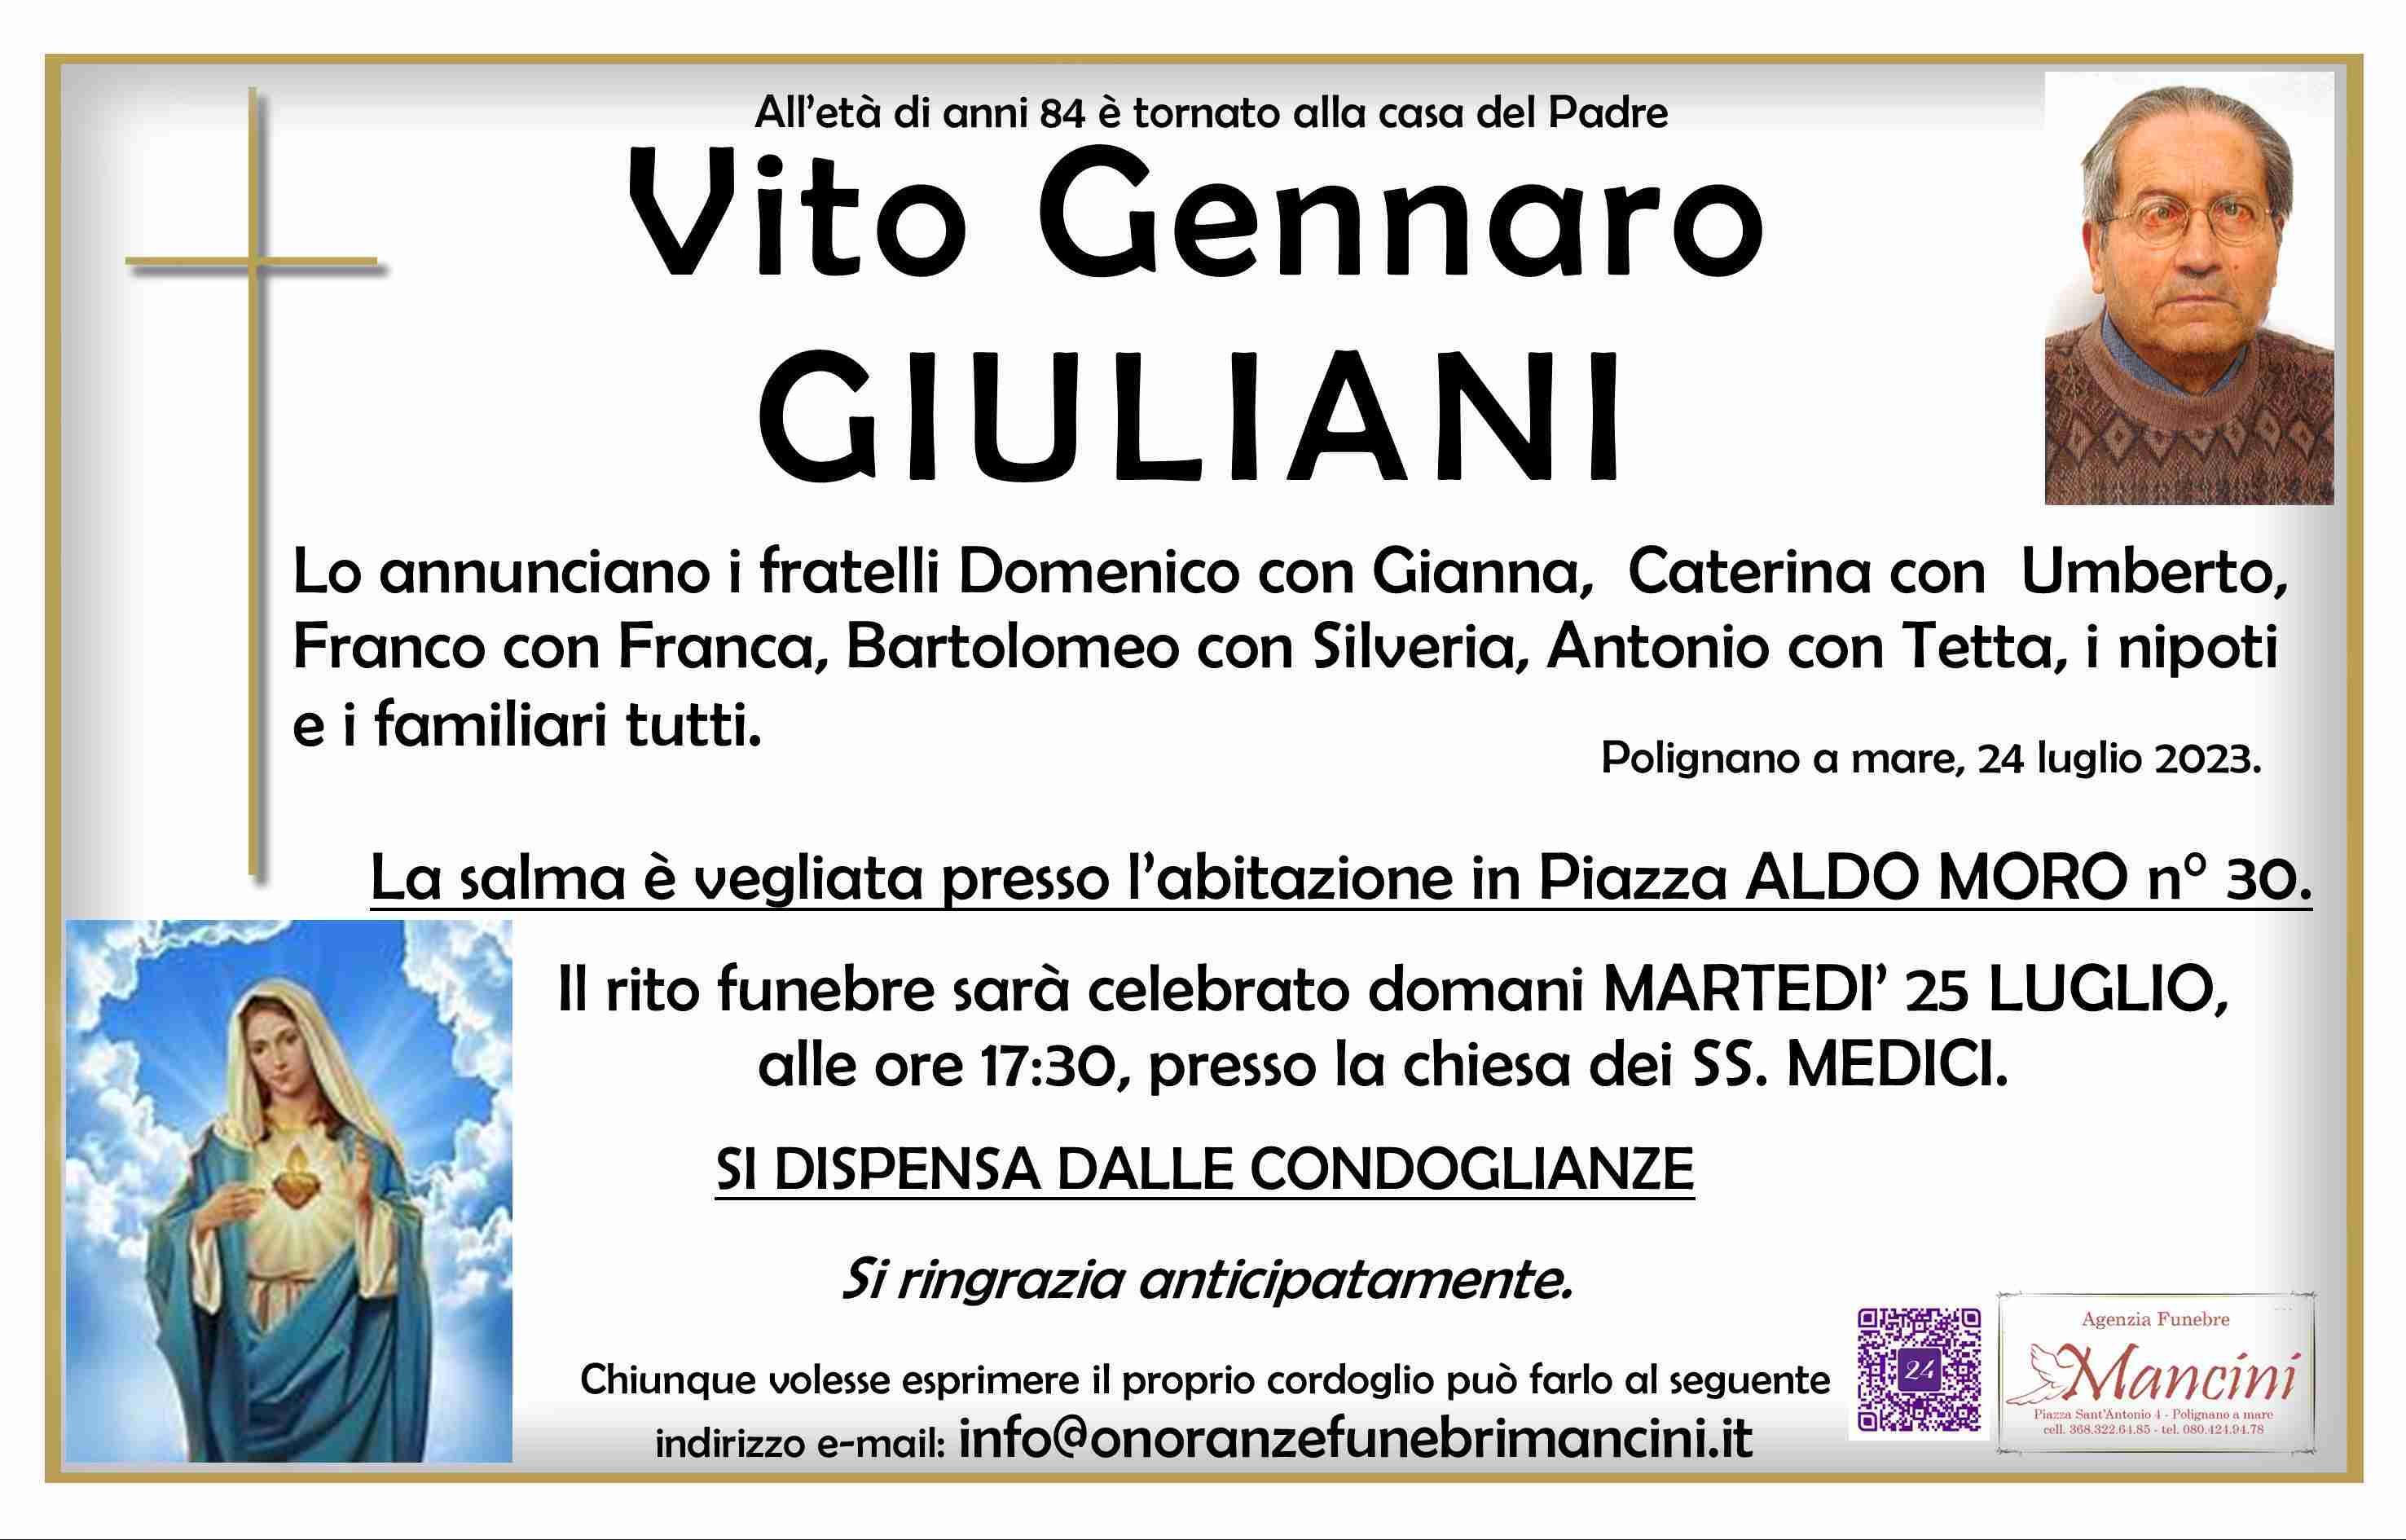 Vito Gennaro Giuliani